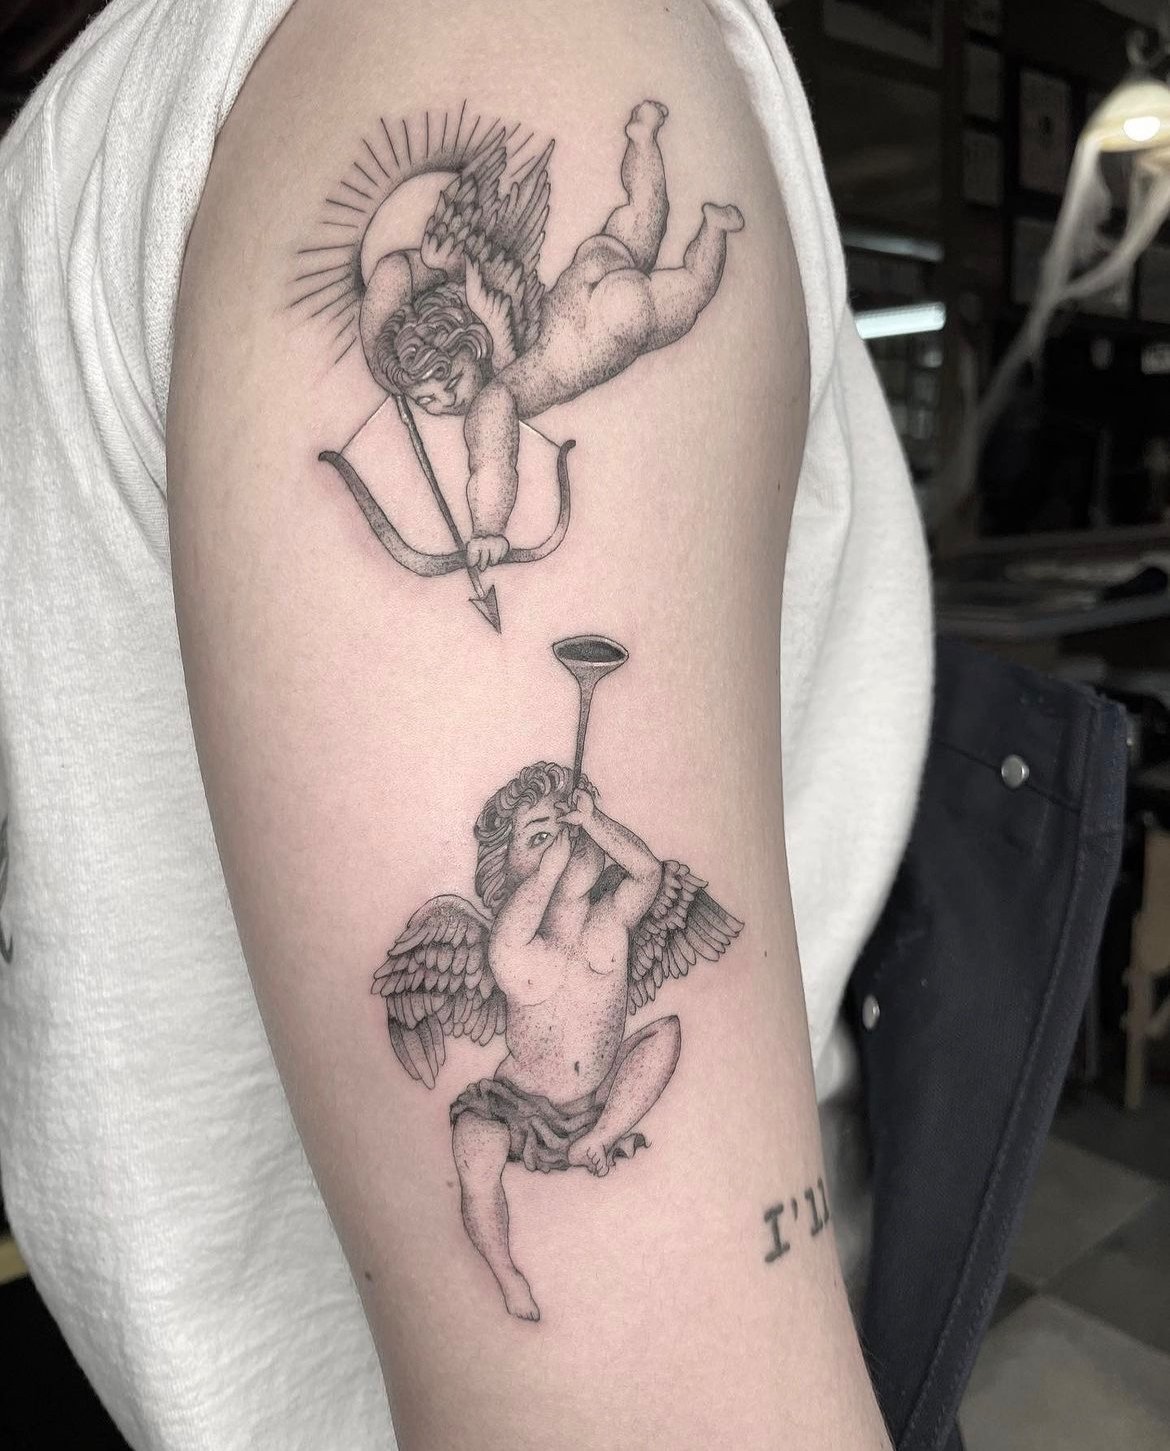 Frankie Accardi Tattoos at Ritual Tattoo in Denver Colorado 